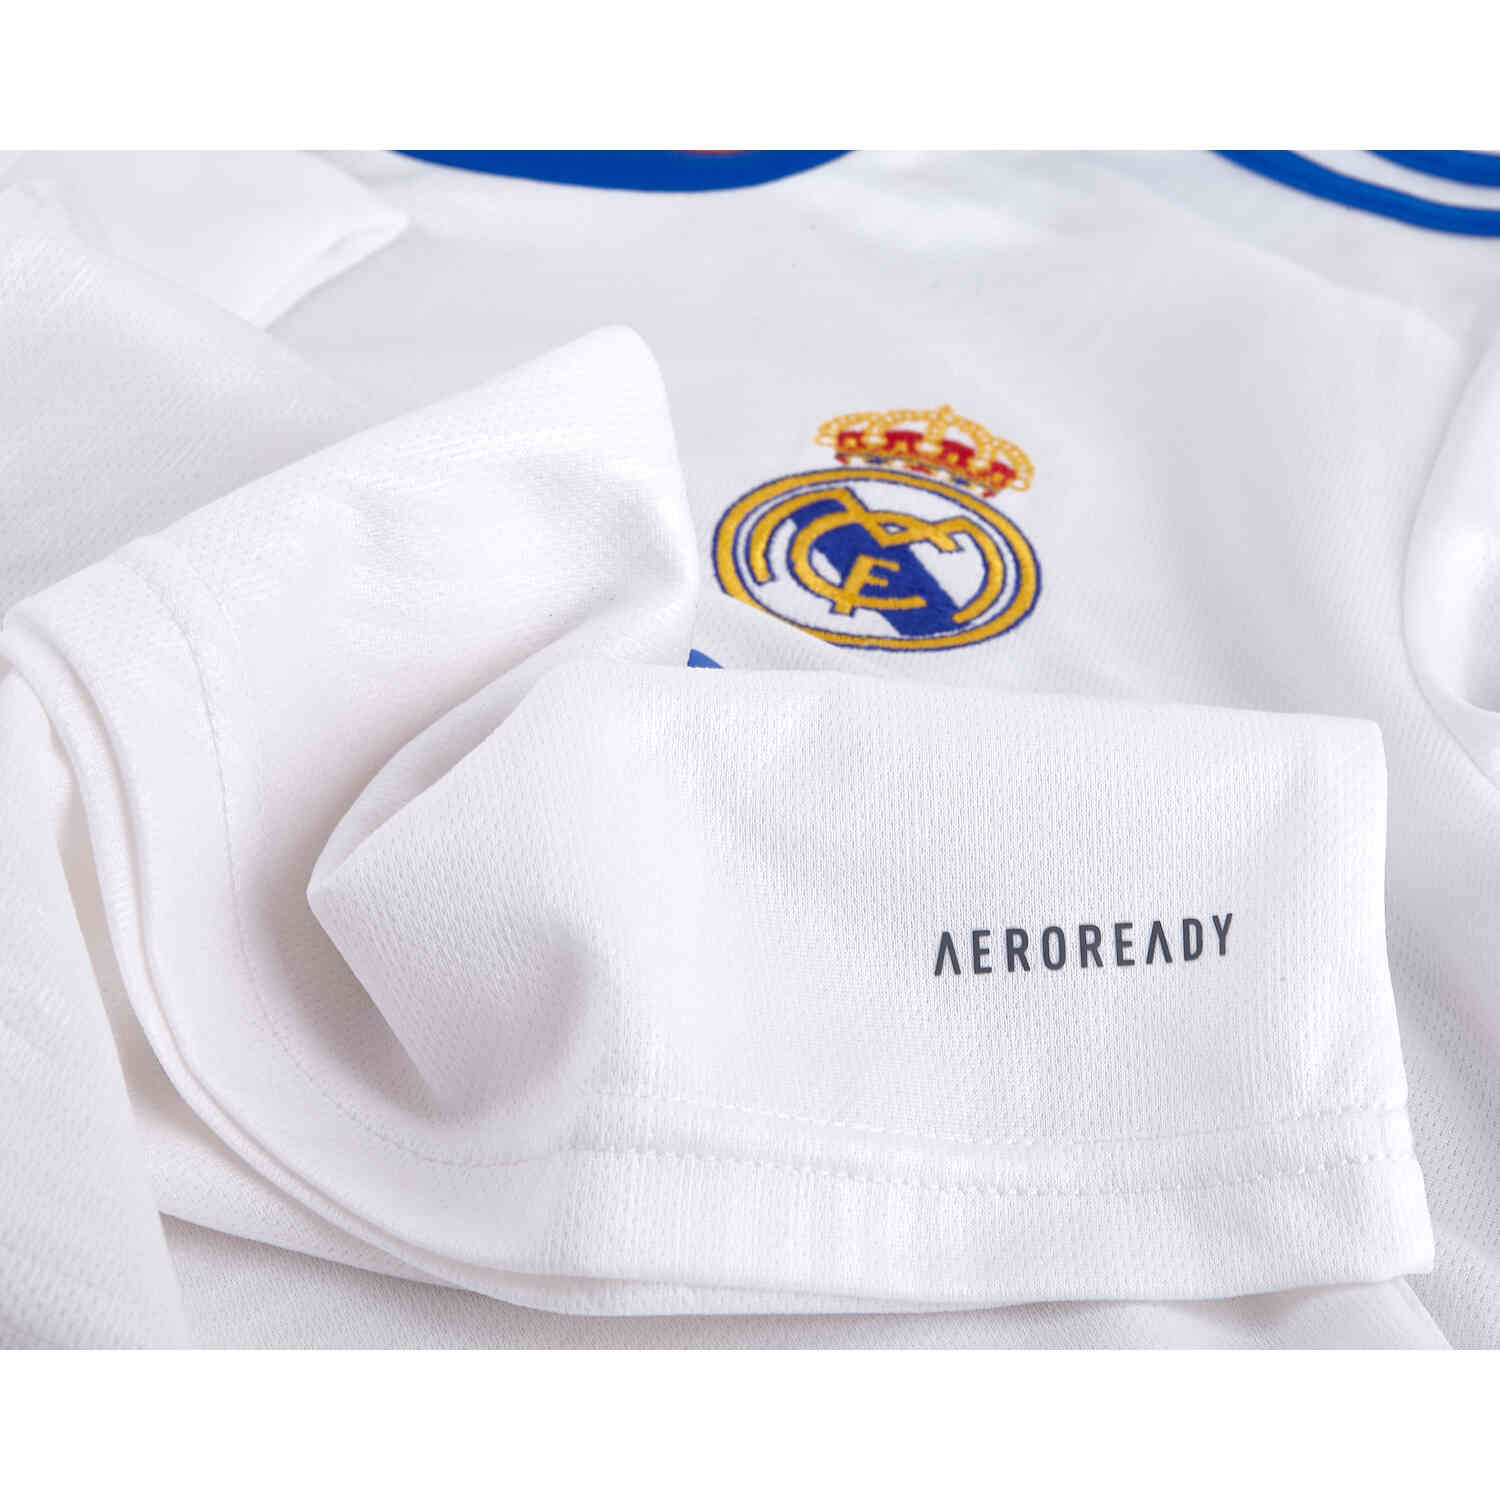 Bale+Real+Madrid+Jersey+EA+Sport+Shirt+L+adidas+Football+Soccer+EA2128+Ig93  for sale online